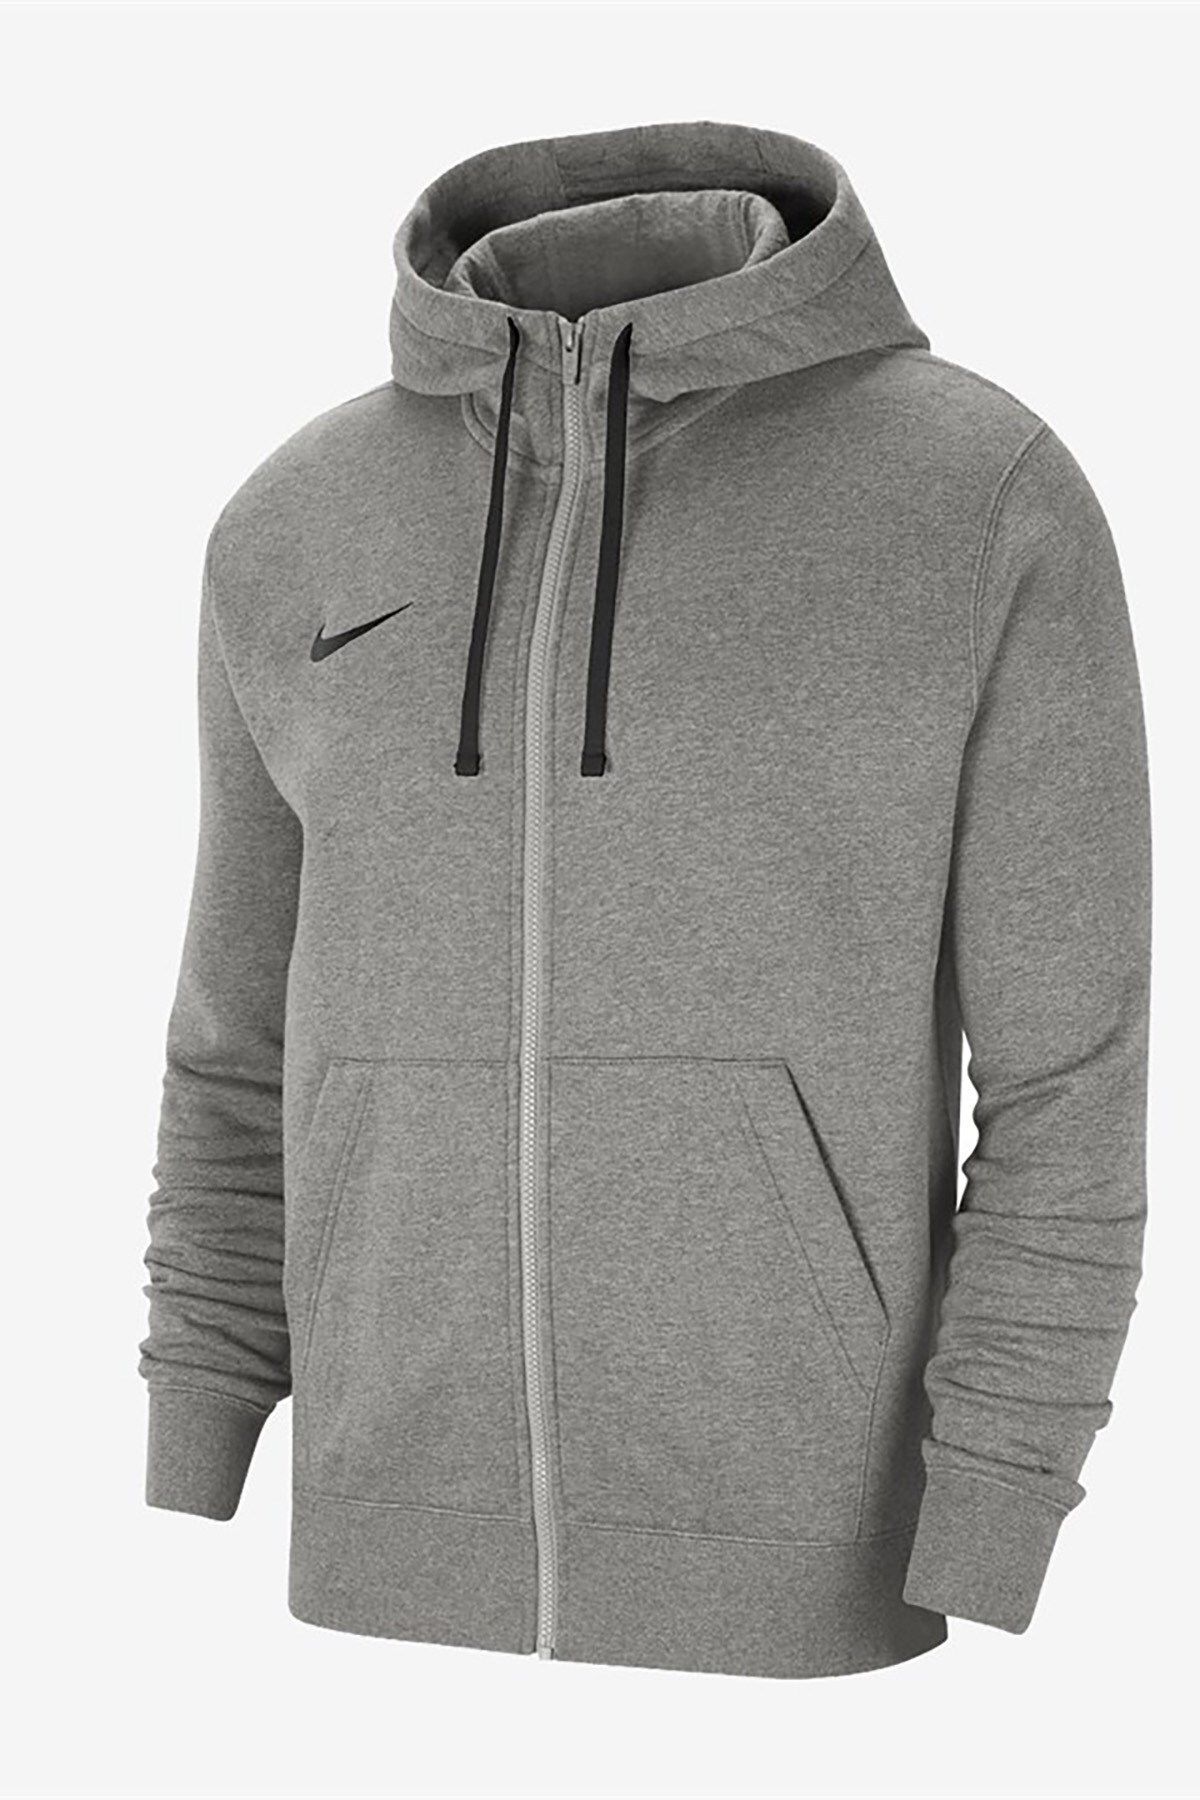 Nike Park 20 Fleece Cw6891-063 Çocuk Sweatshirt